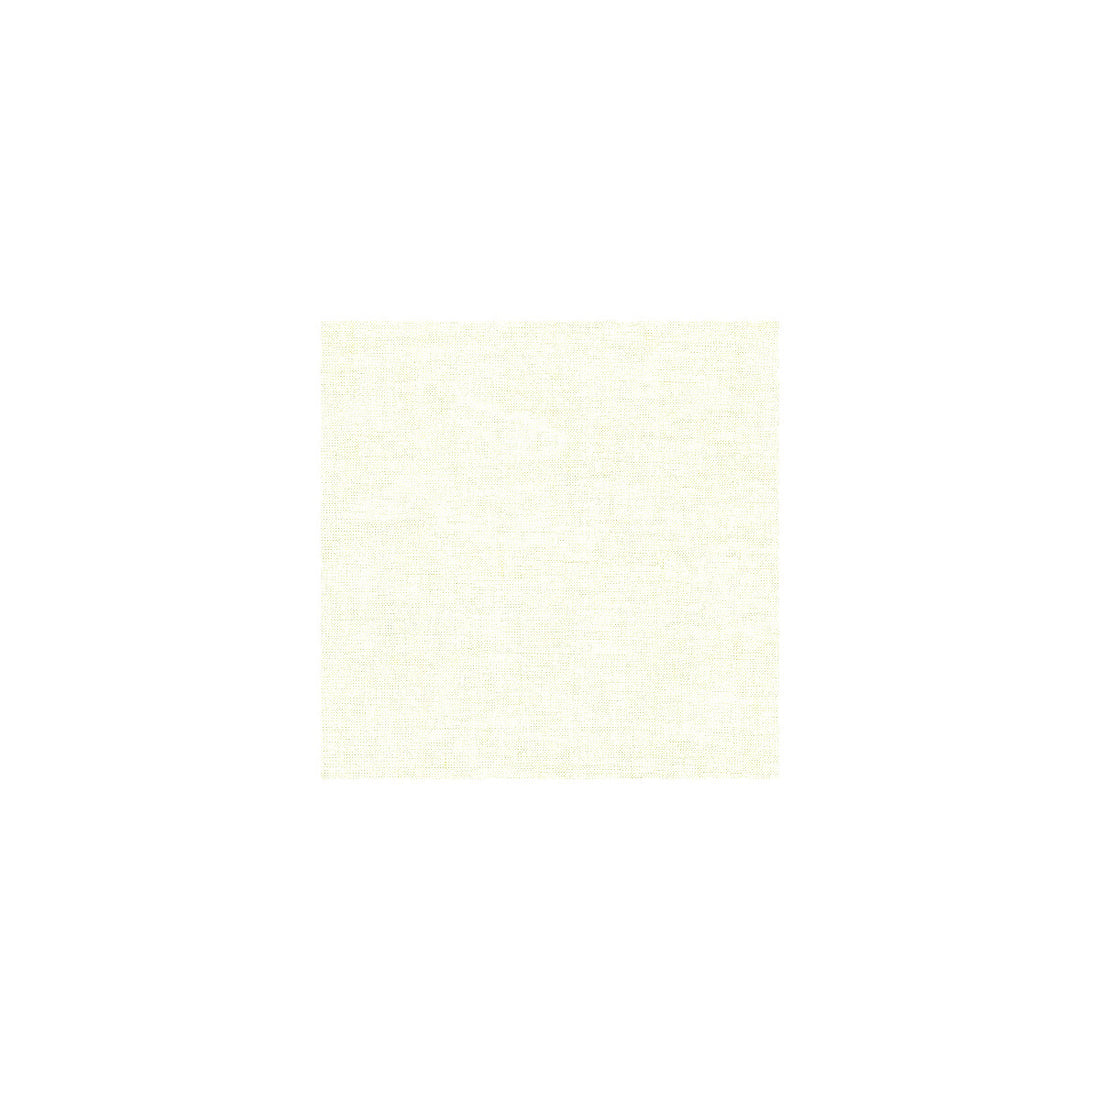 Breezy Linen fabric in sugar color - pattern 9726.1.0 - by Kravet Basics